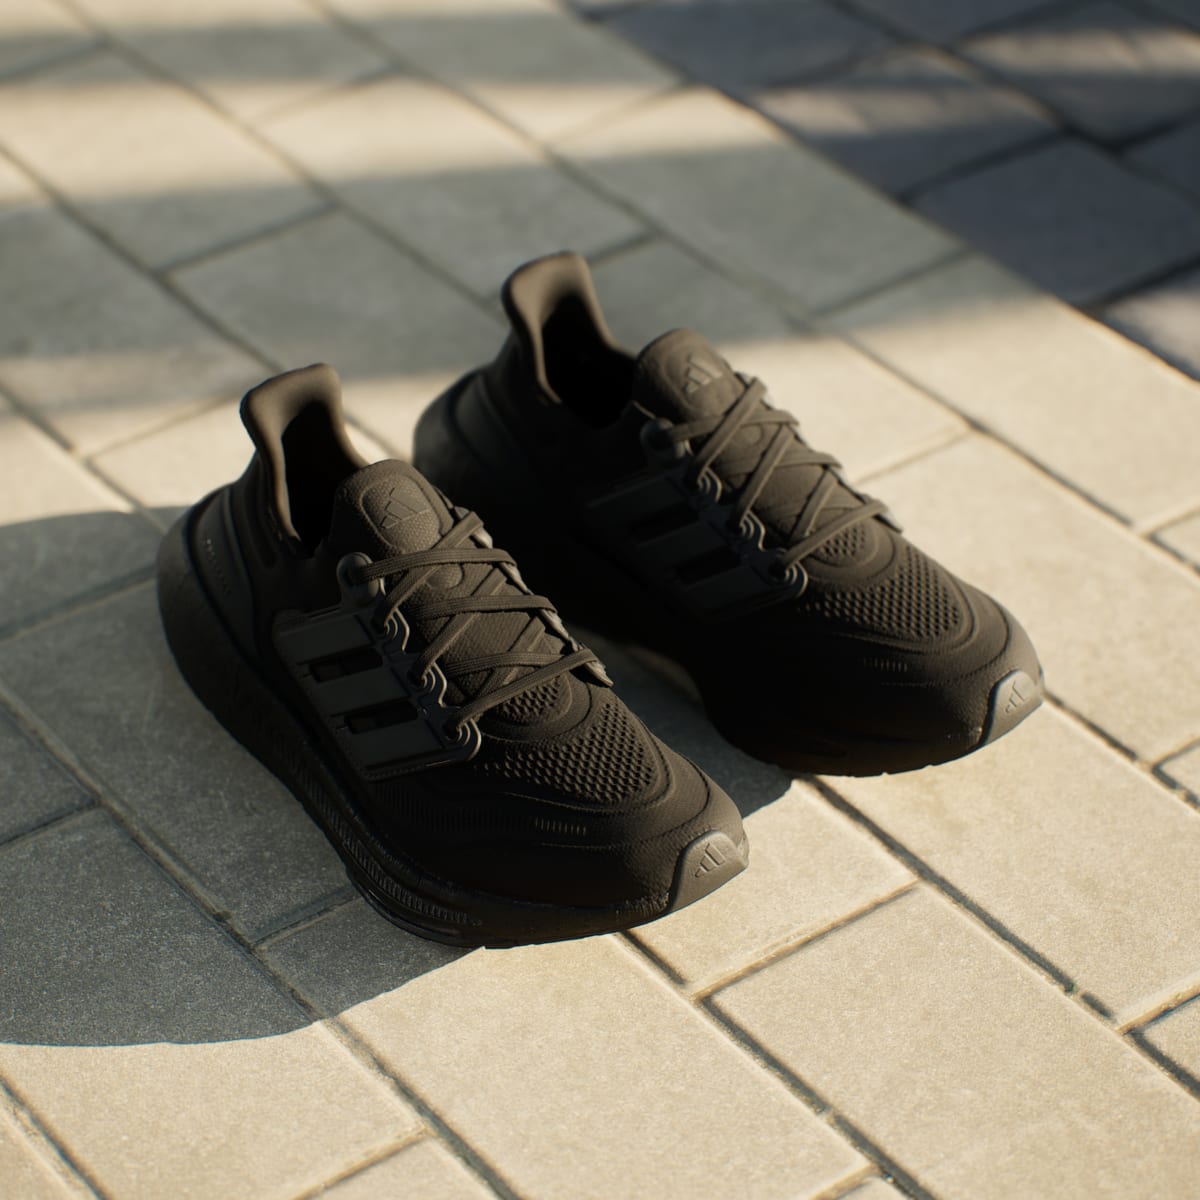 Adidas Ultraboost Light Shoes. 4